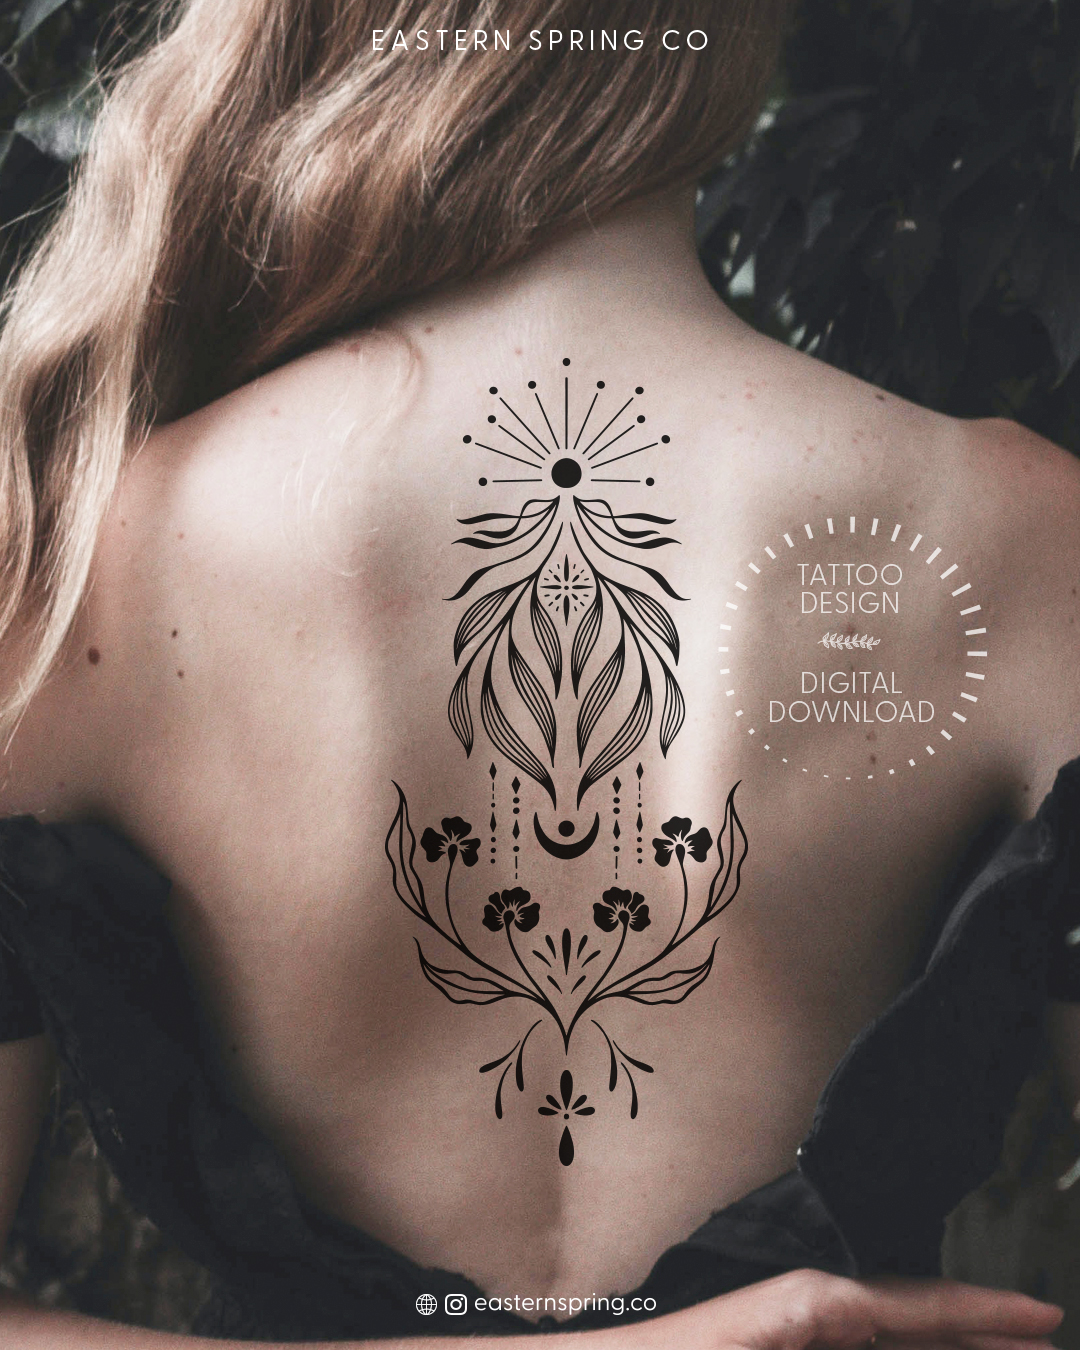 Eastern Spring Co artistic tattoo design